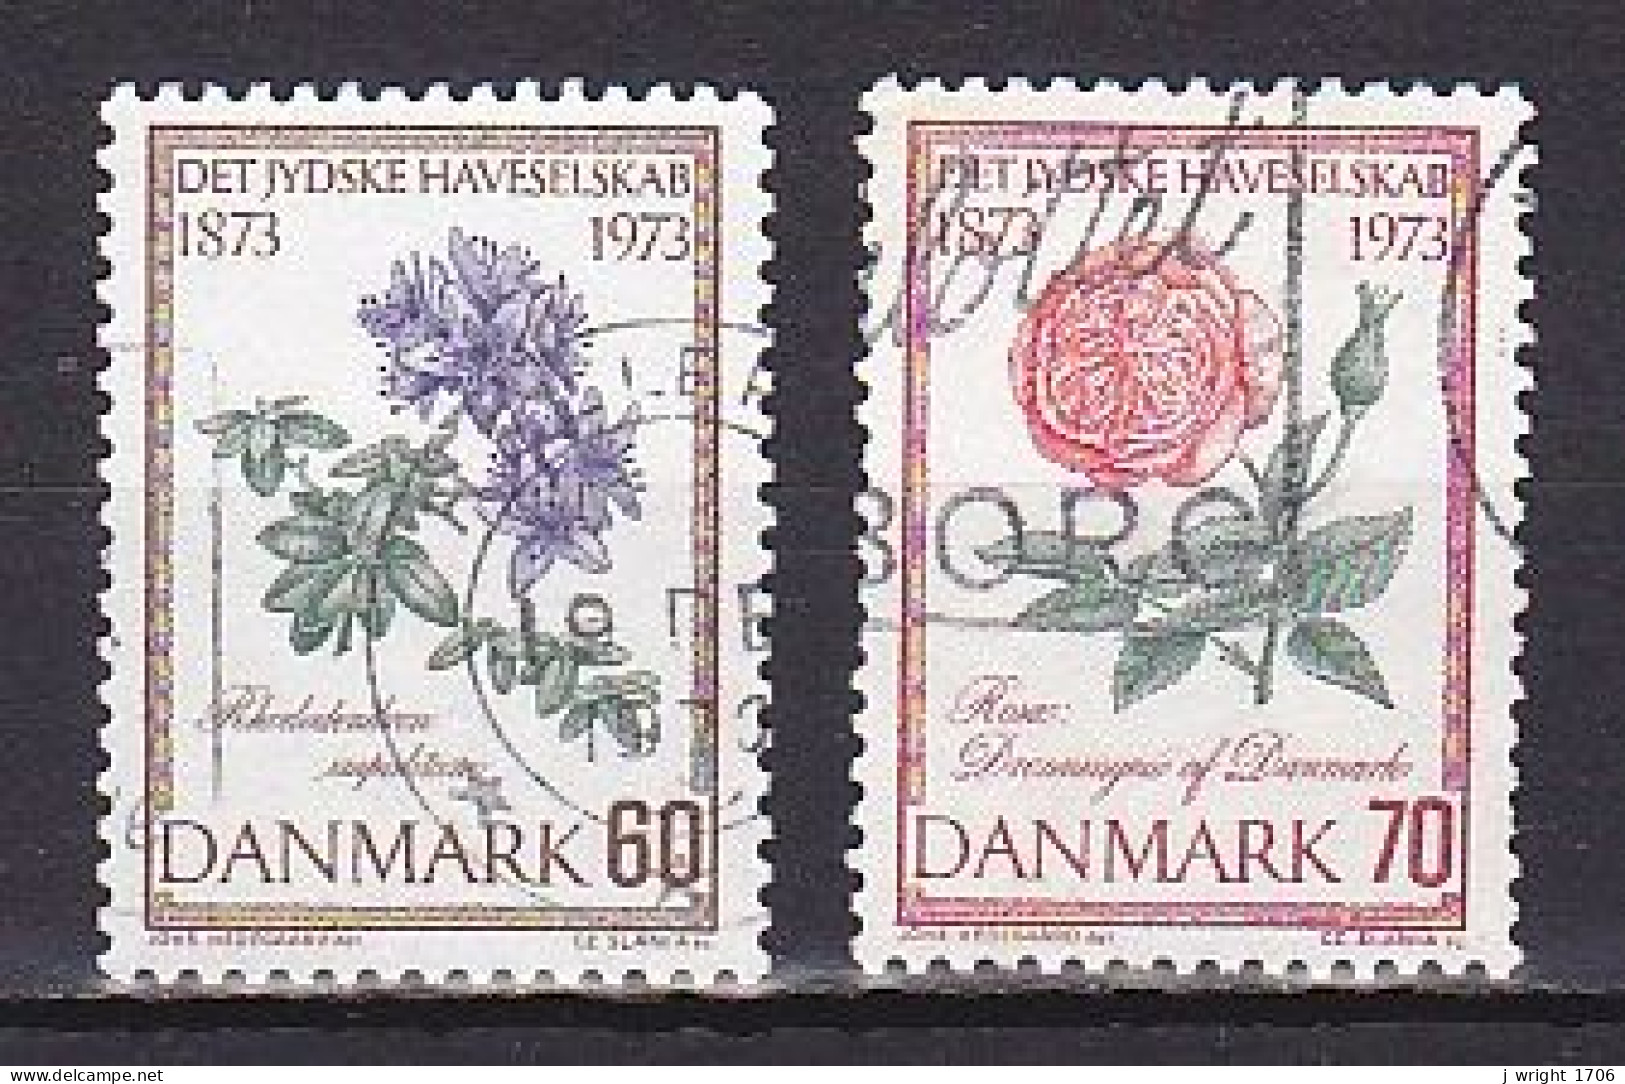 Denmark, 1973, Jutland Horticultural Society Centenary, Set, USED - Oblitérés